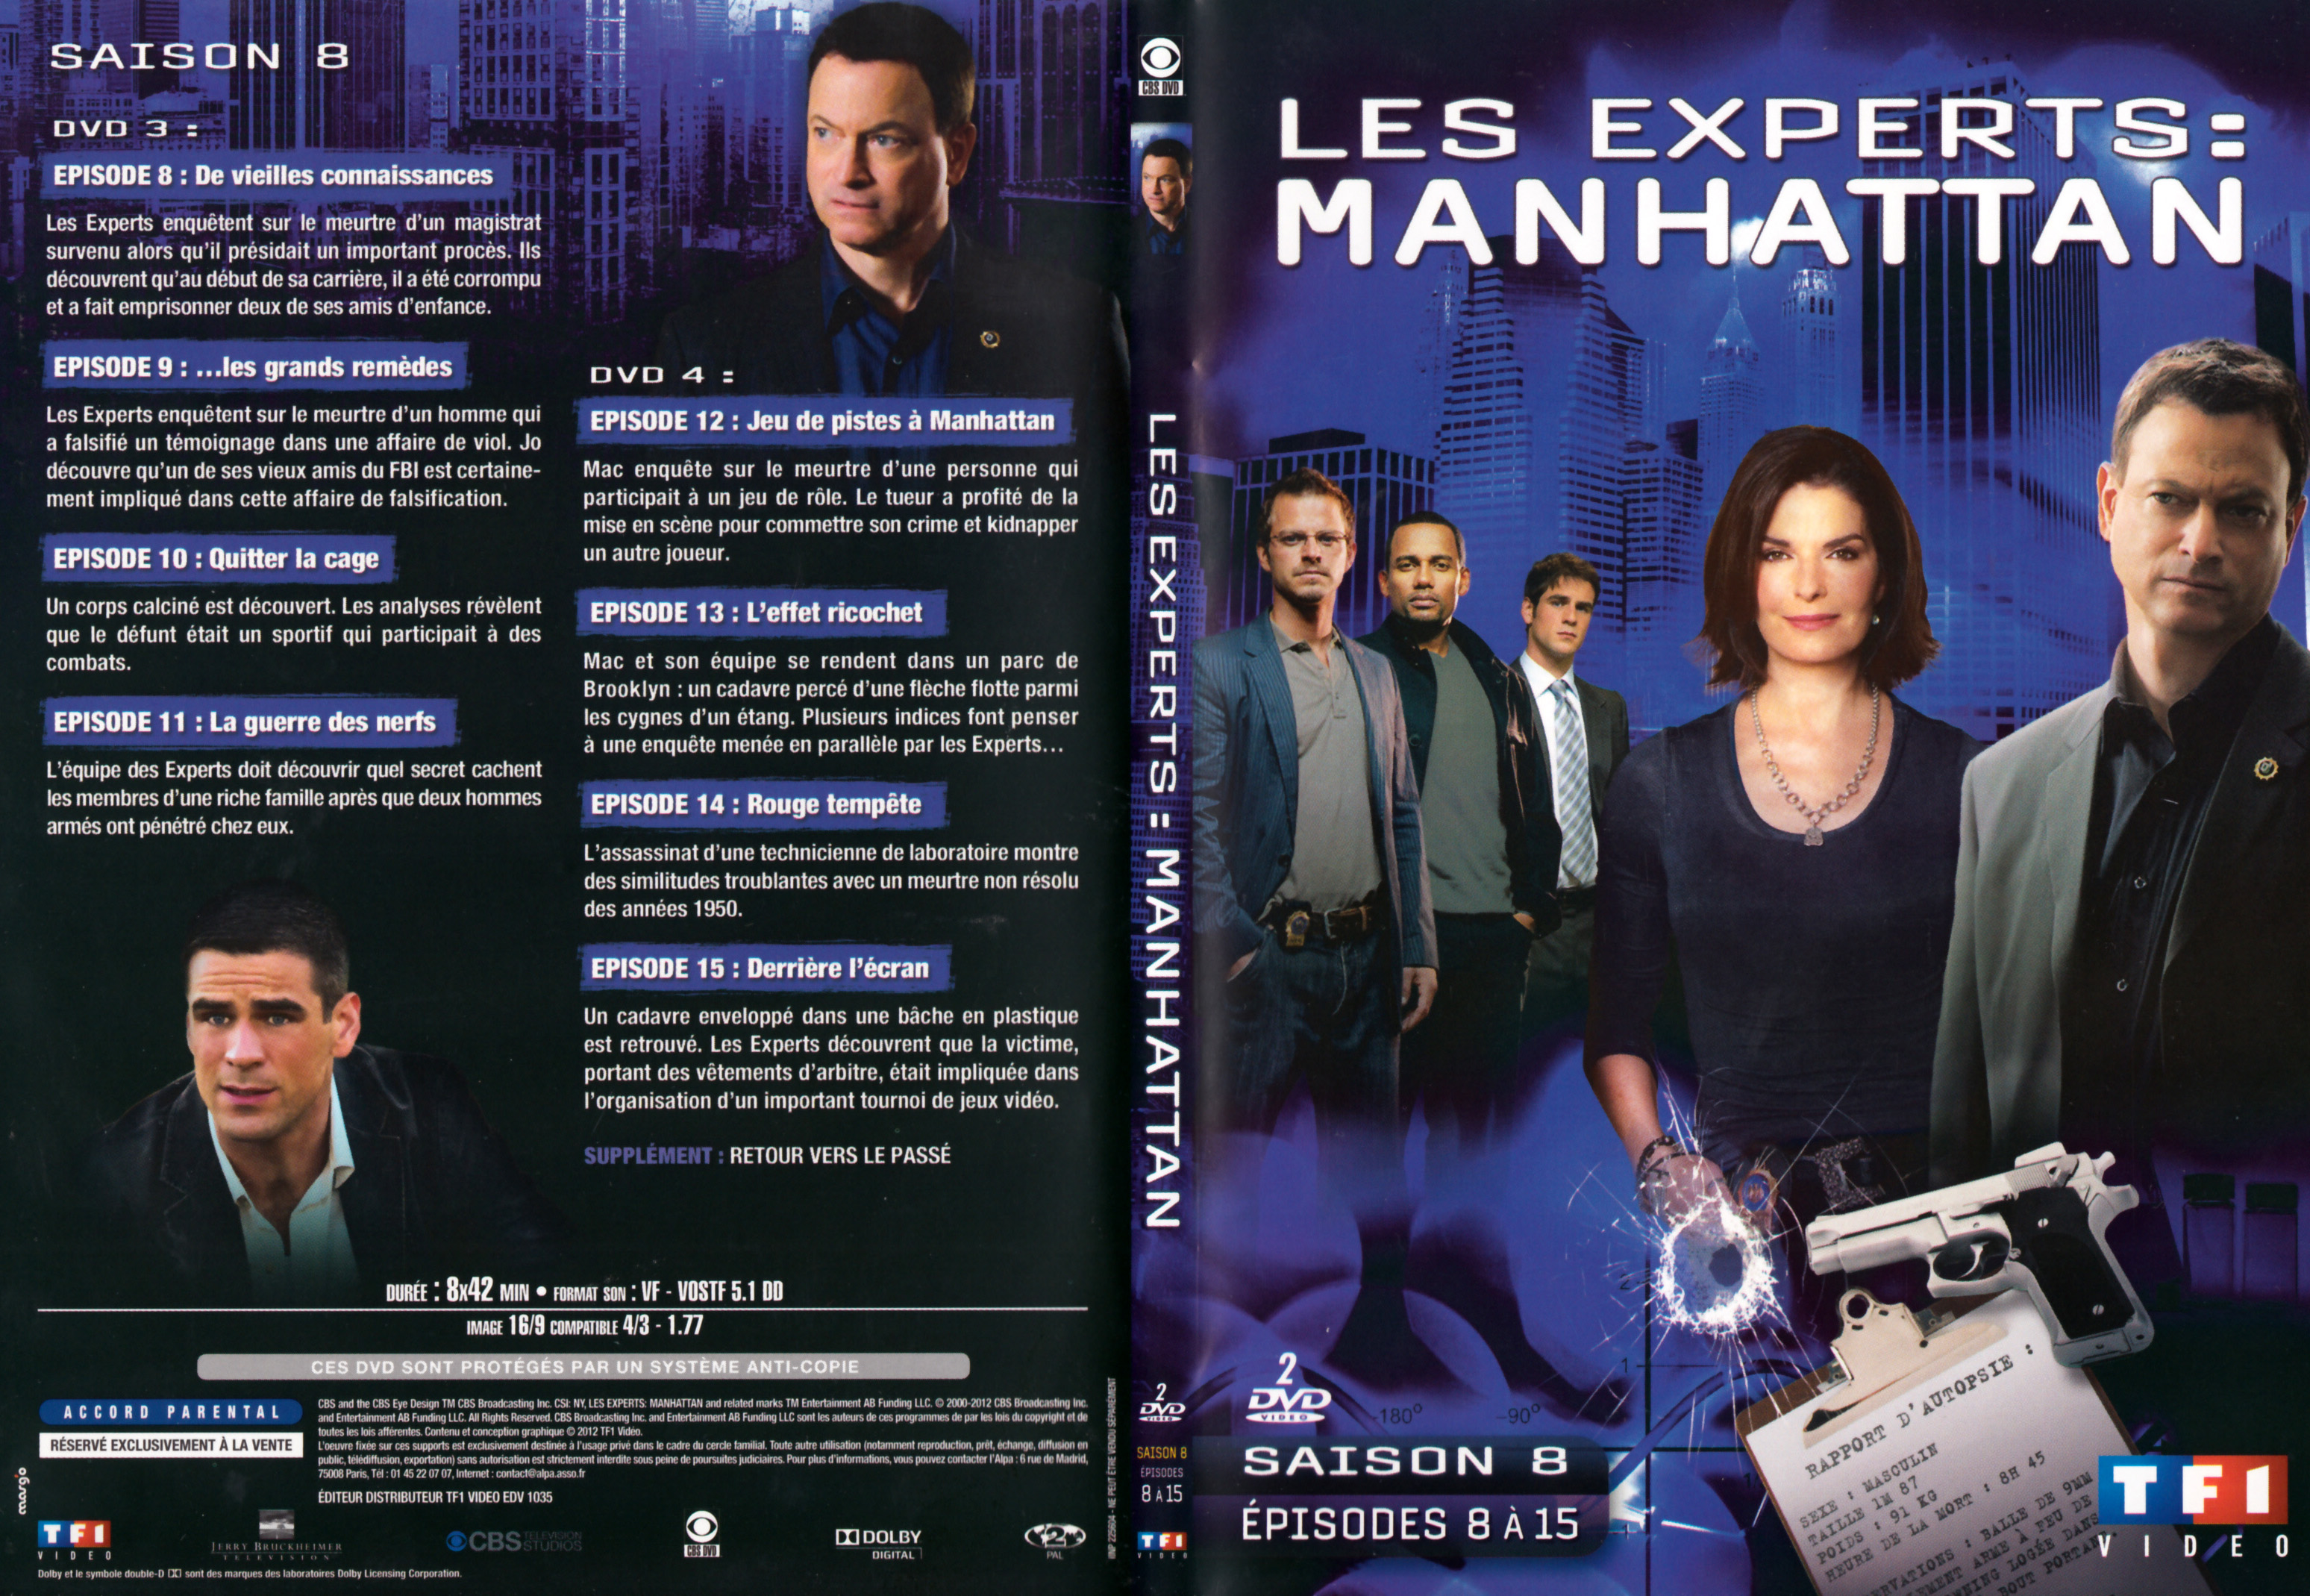 Jaquette DVD Les Experts Manhattan Saison 8 DVD 2